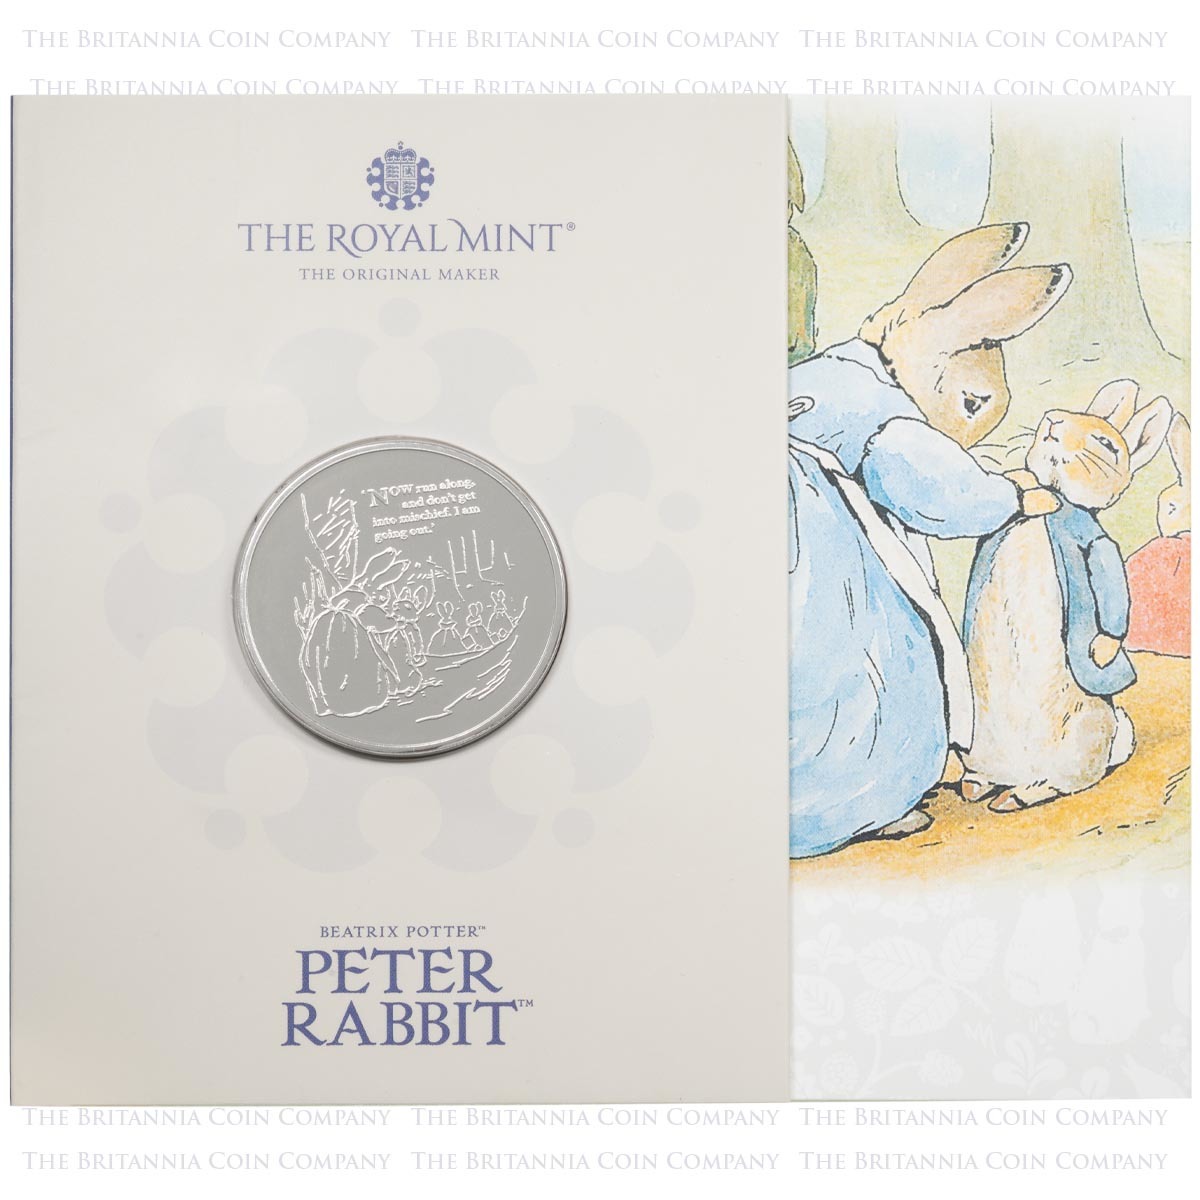 uk21prbu-2021-tale-of-peter-rabbit-five-pound-brilliant-uncirculated-uk-coin-in-folder-003-m